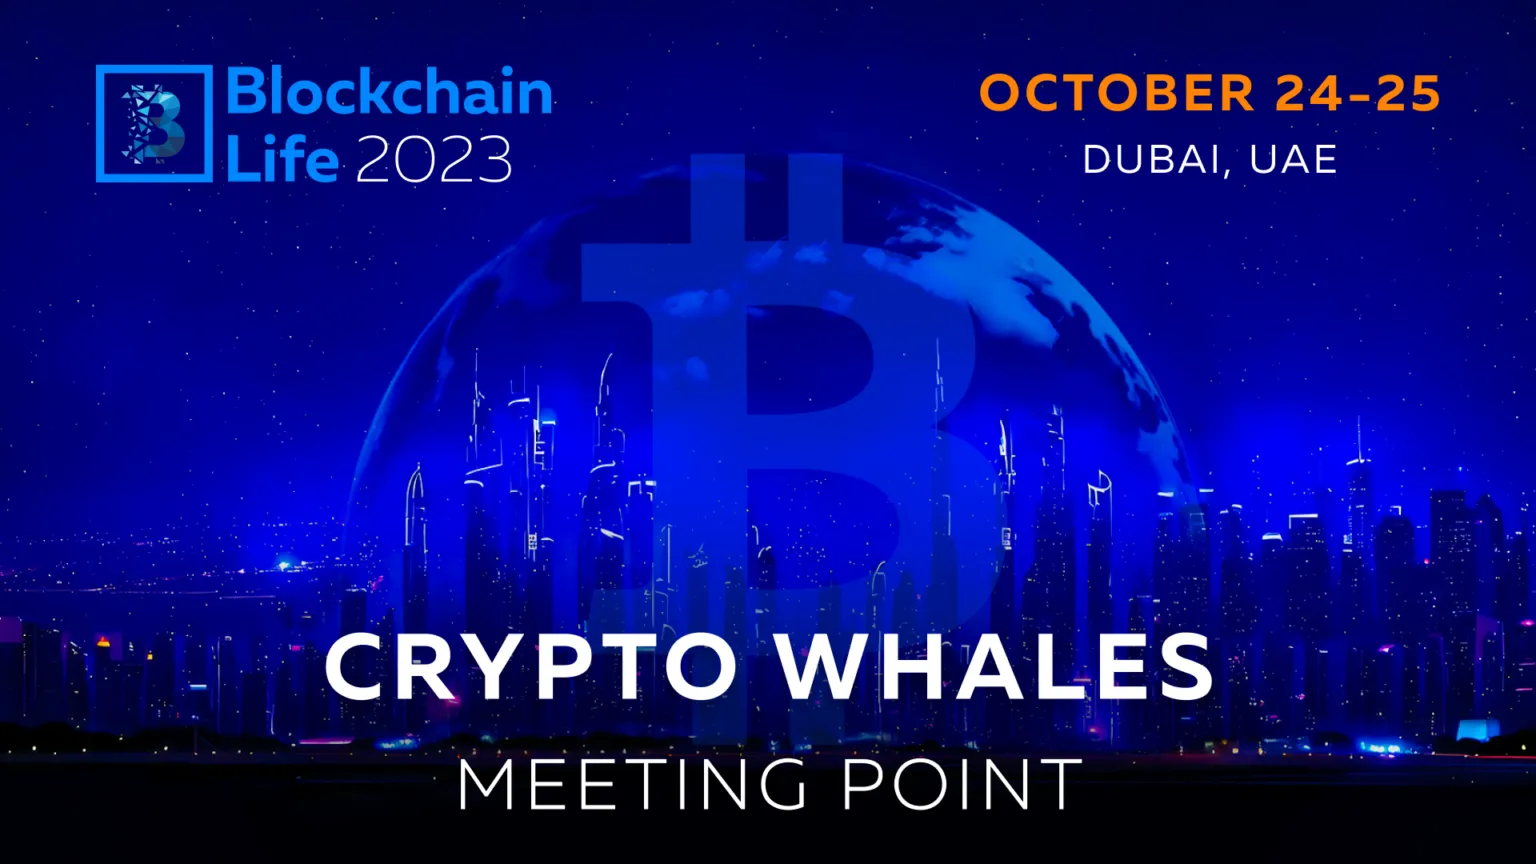 Acara kripto crypto event Blockchain Life Forum 2023